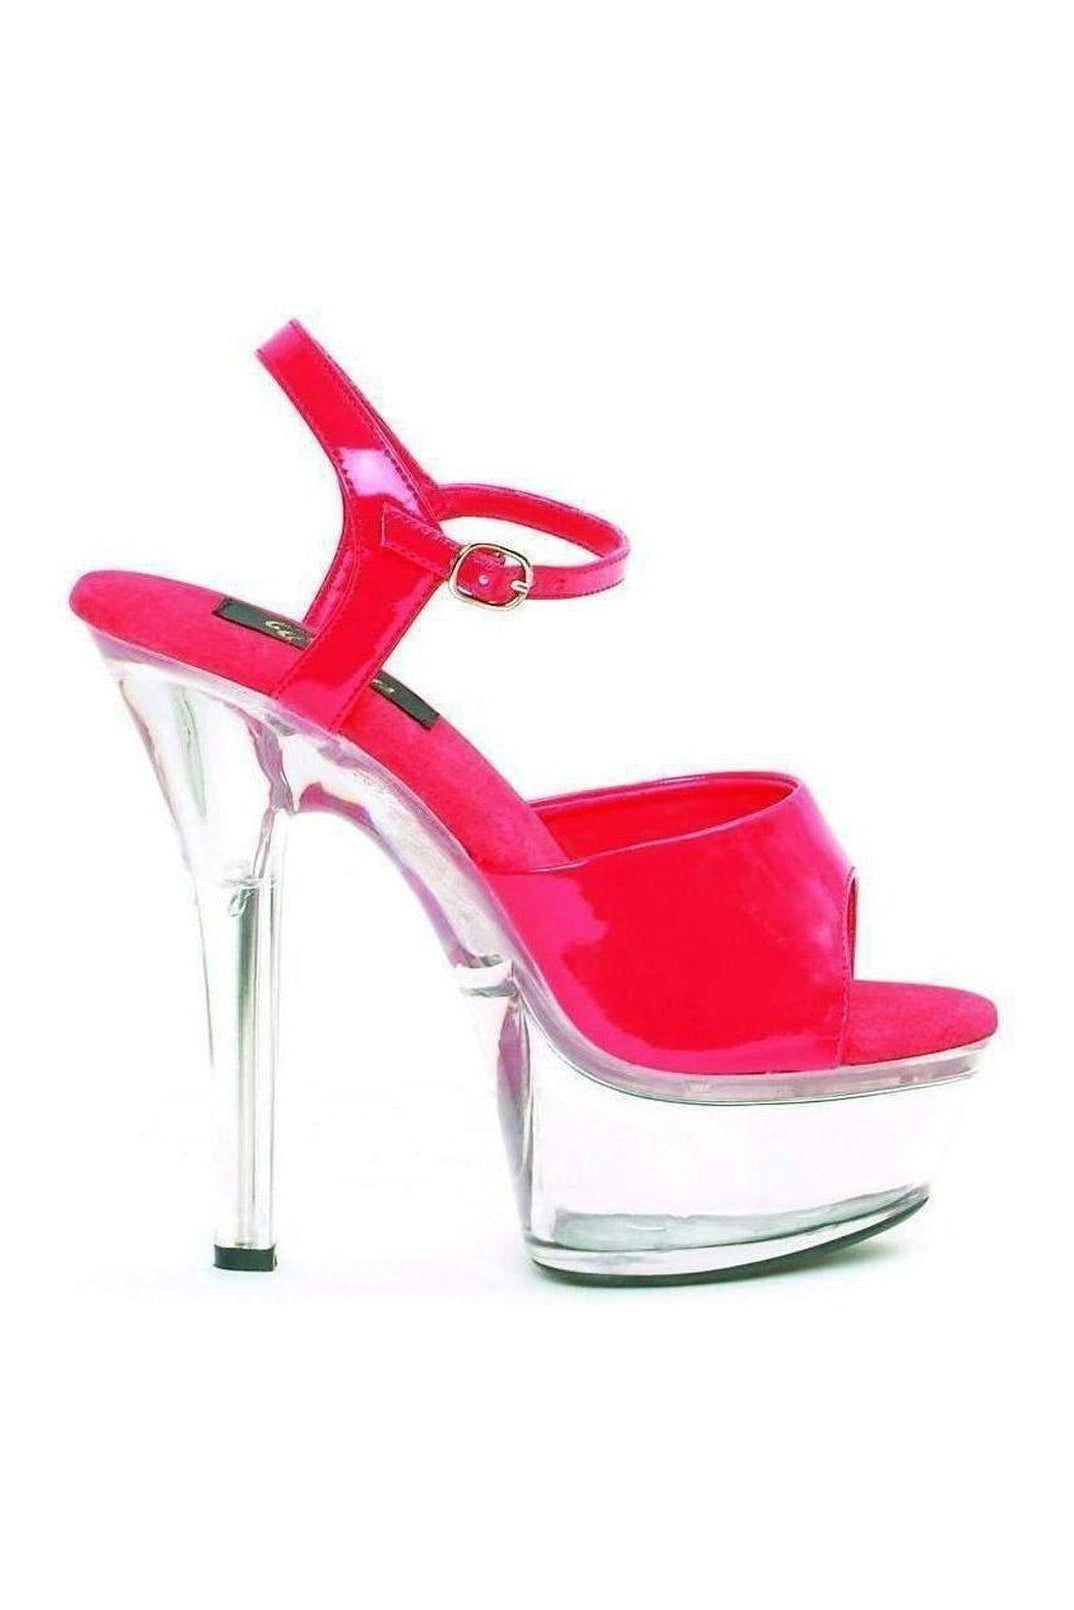 Ellie Shoes Red Sandals Platform Stripper Shoes | Buy at Sexyshoes.com